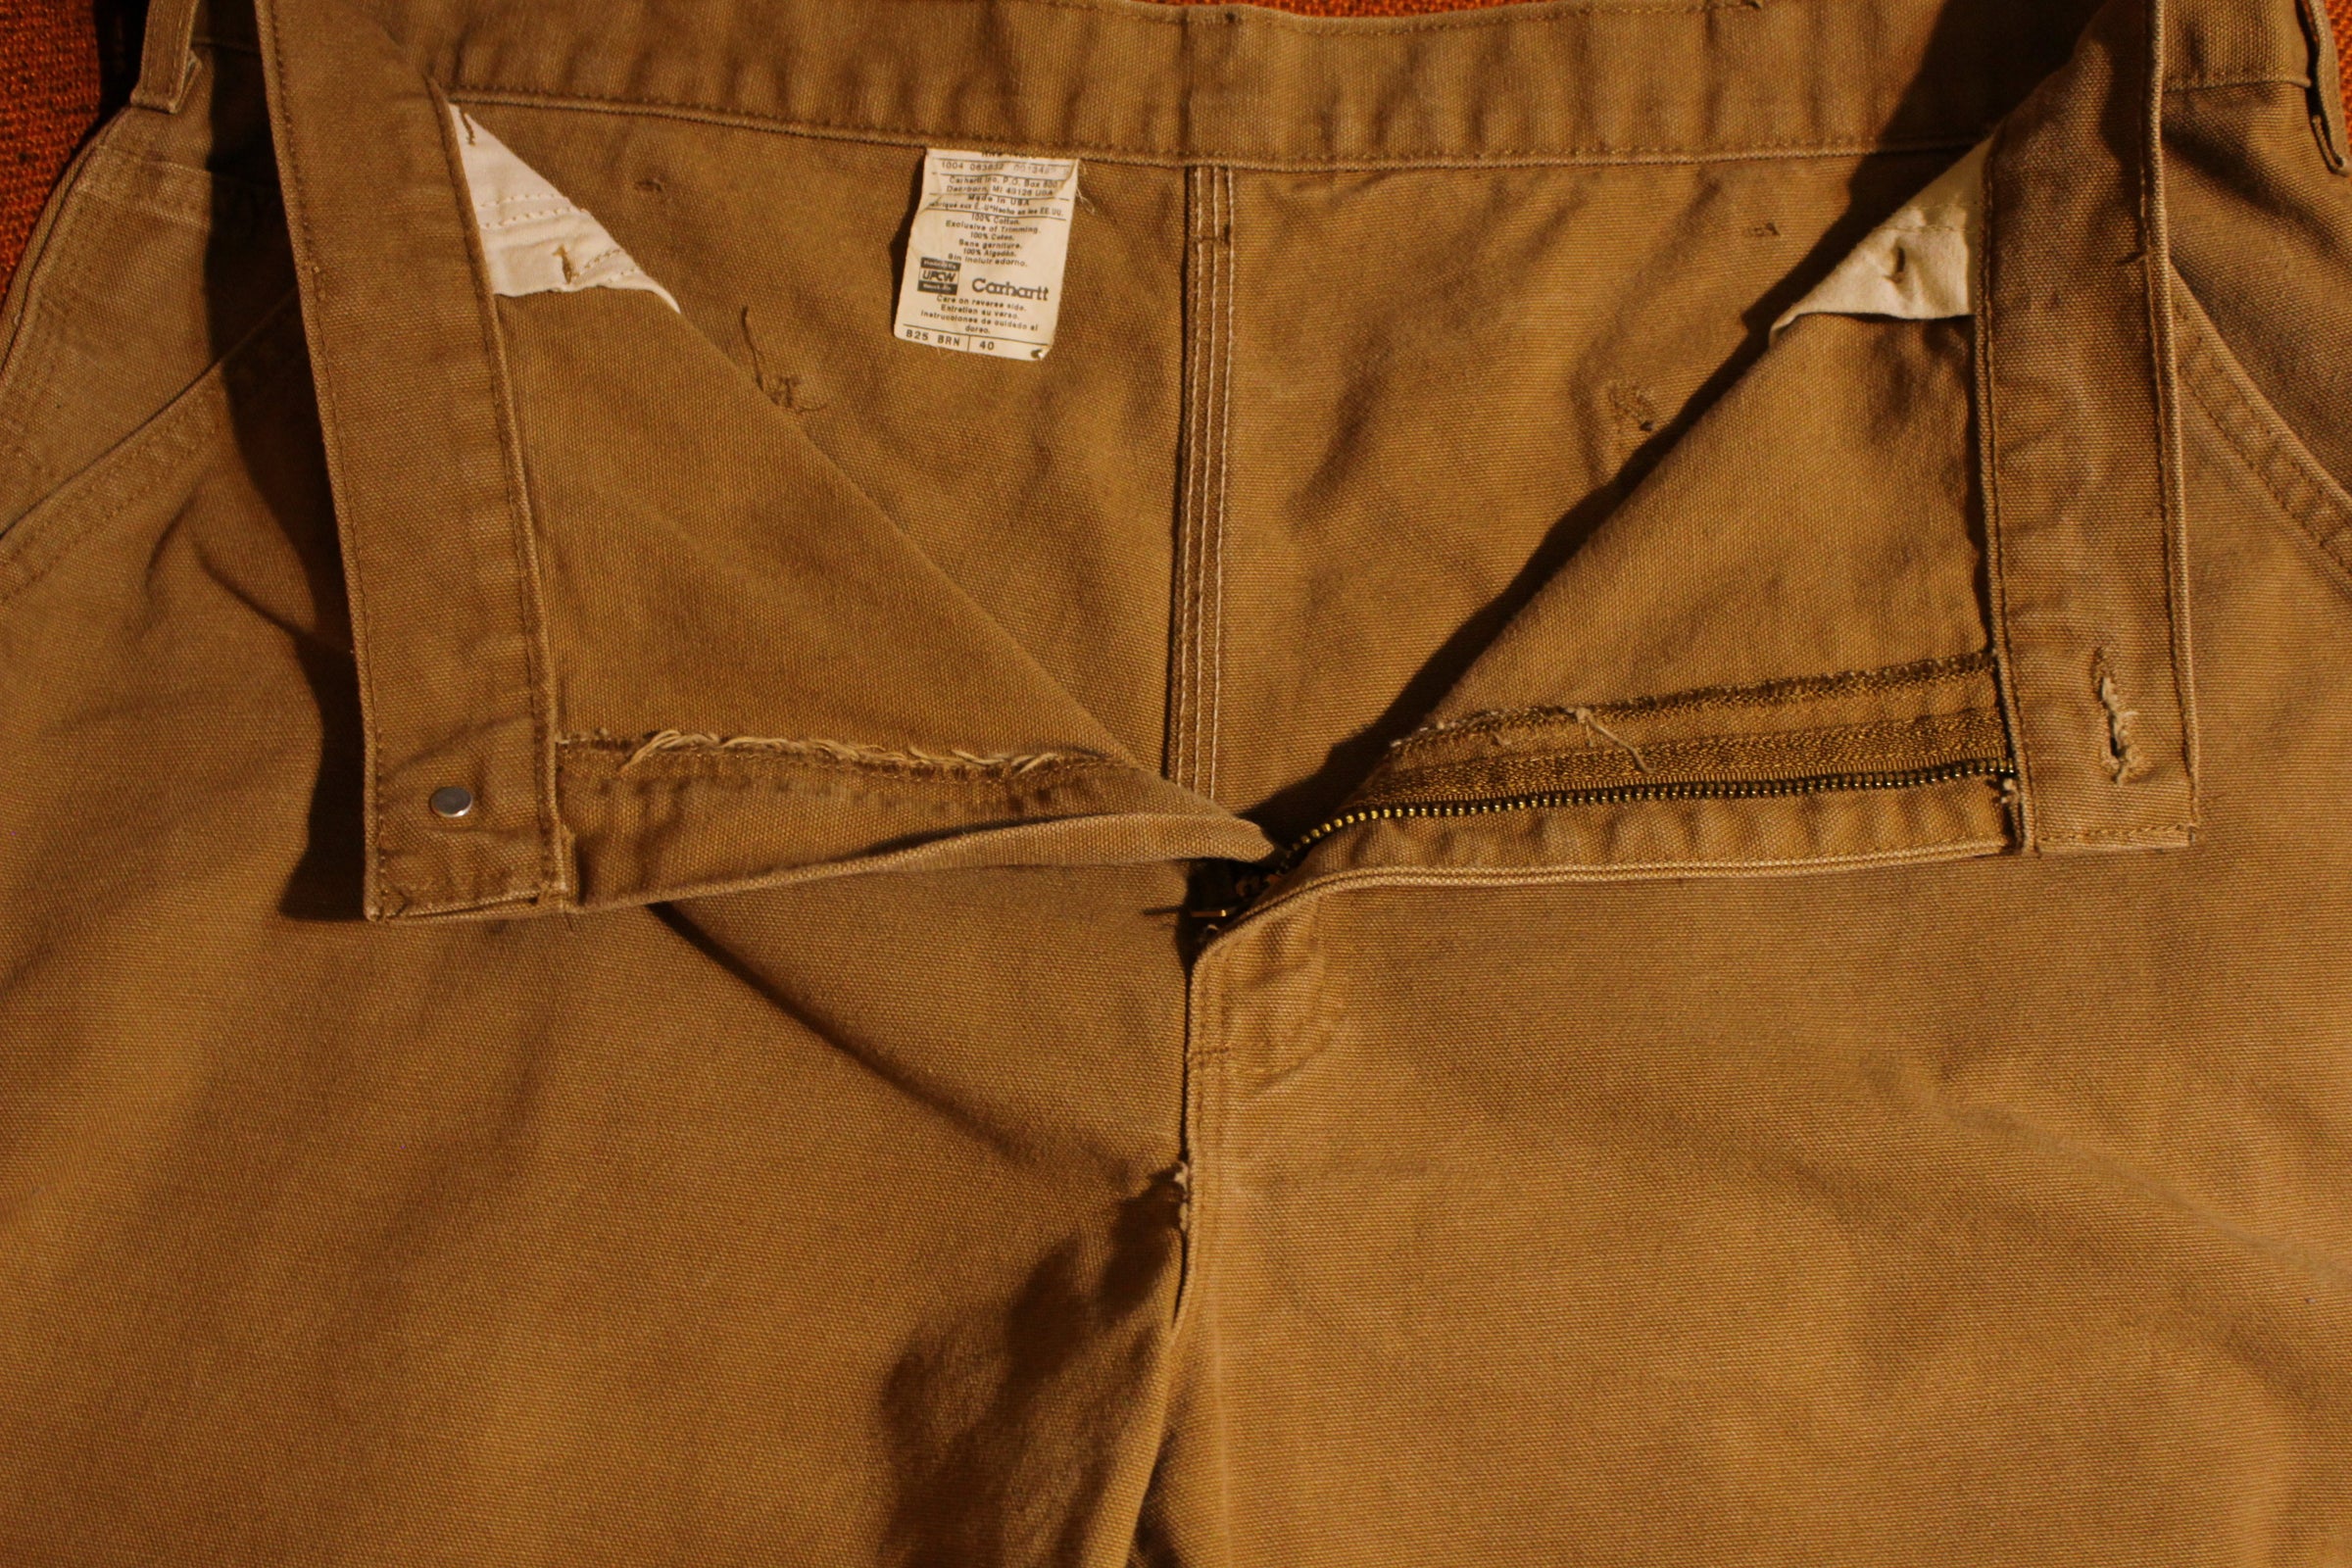 Carhartt Duck Work Shorts B25 Carpenter Brown Cotton Made in USA Men's ...